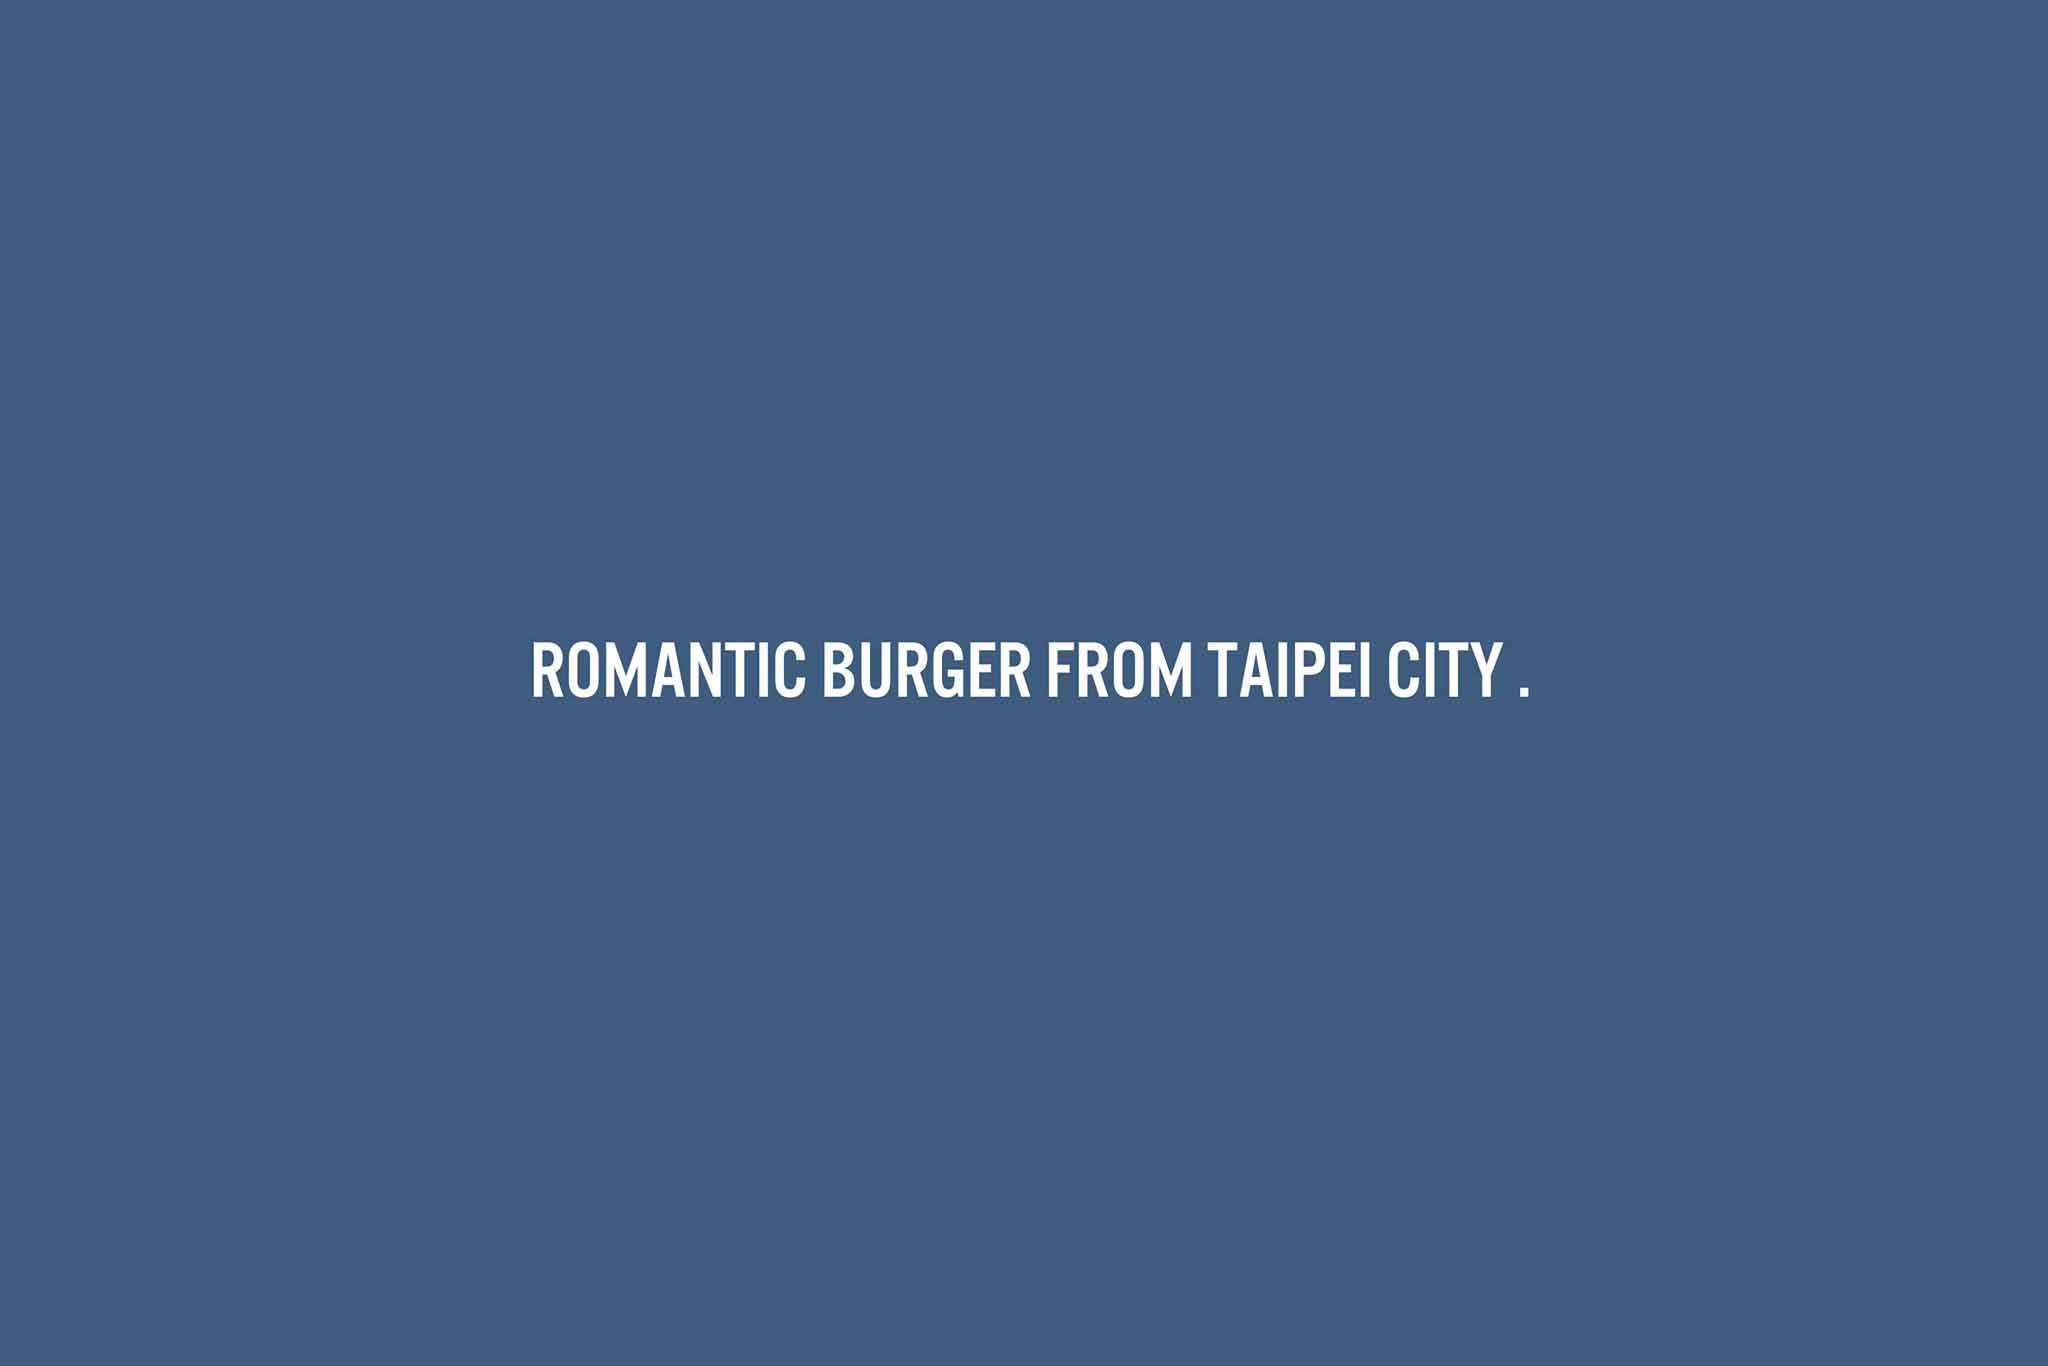 Everywhere burger club 漢堡俱樂部